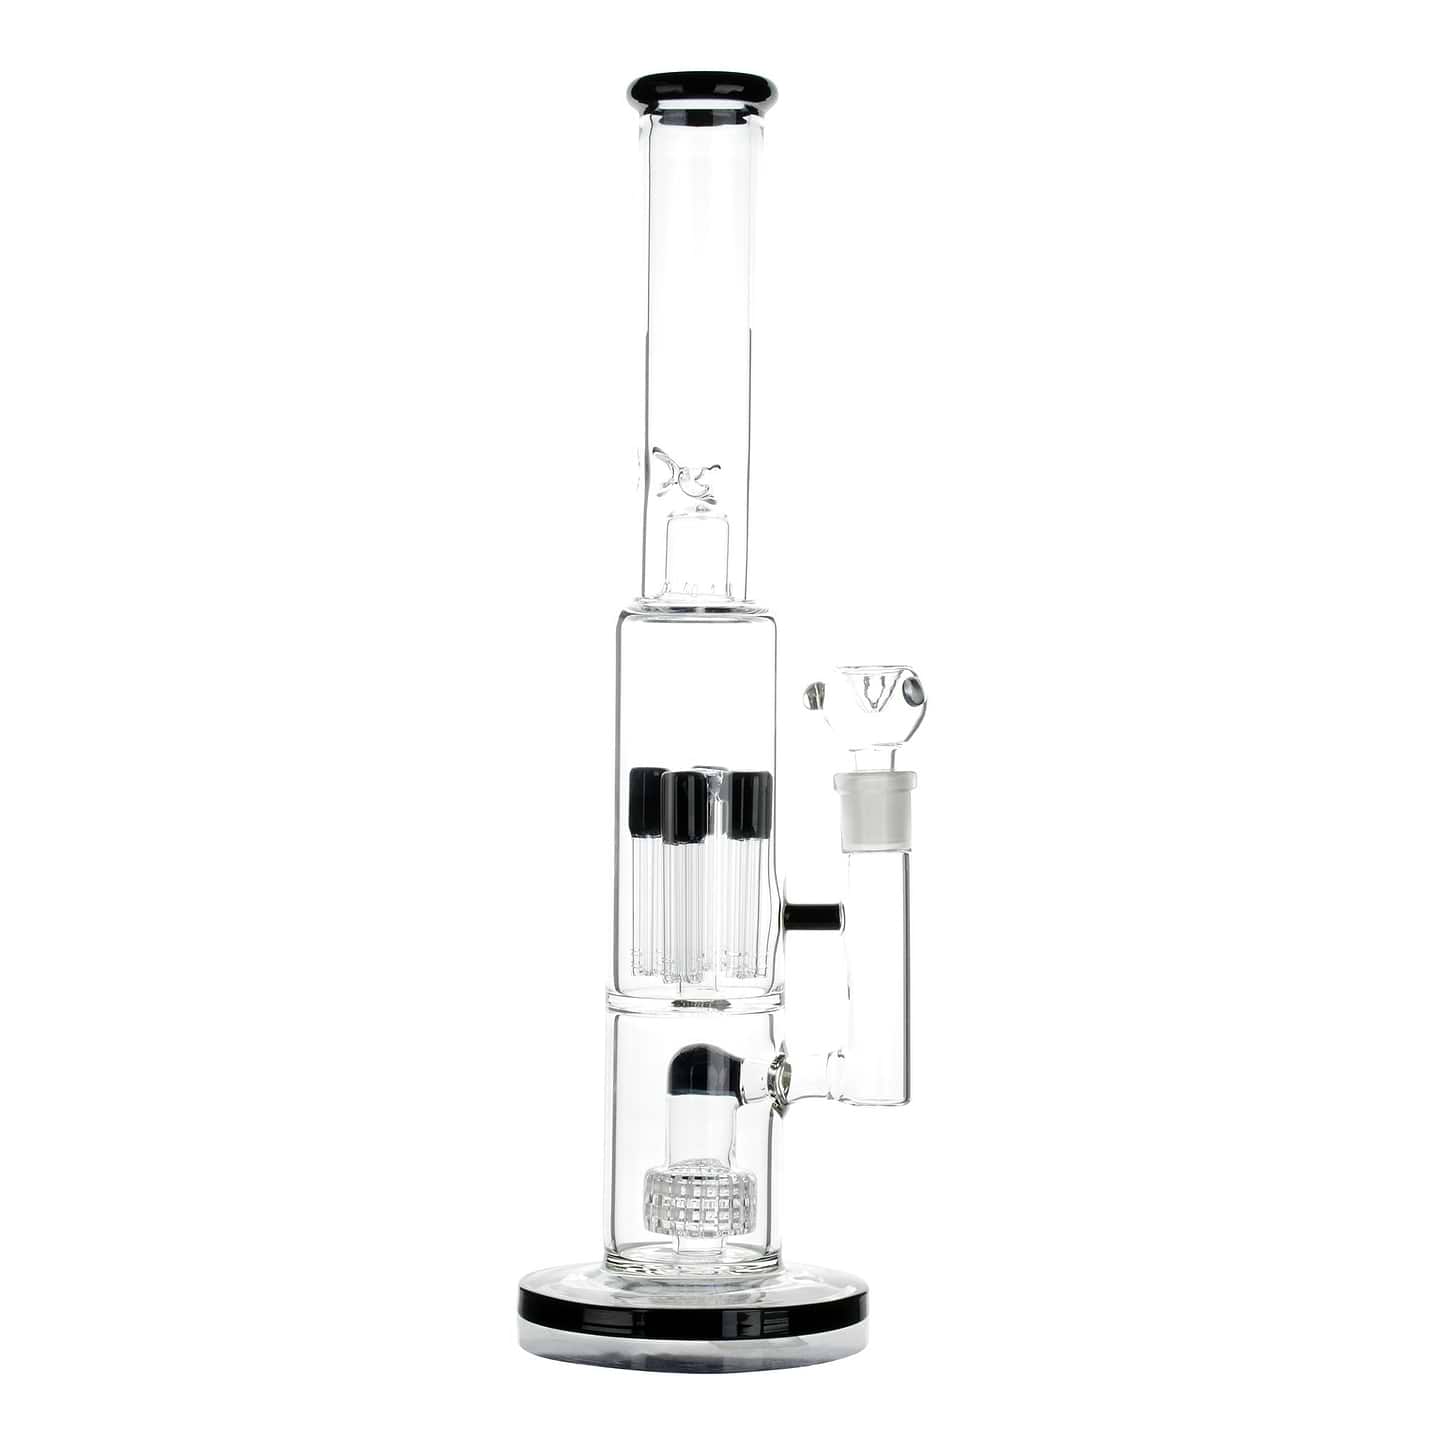 Black Huge 17-inch glass quad octo percolated bong smoking device 4 tree percs, matrix perc and UFO perc sleek look